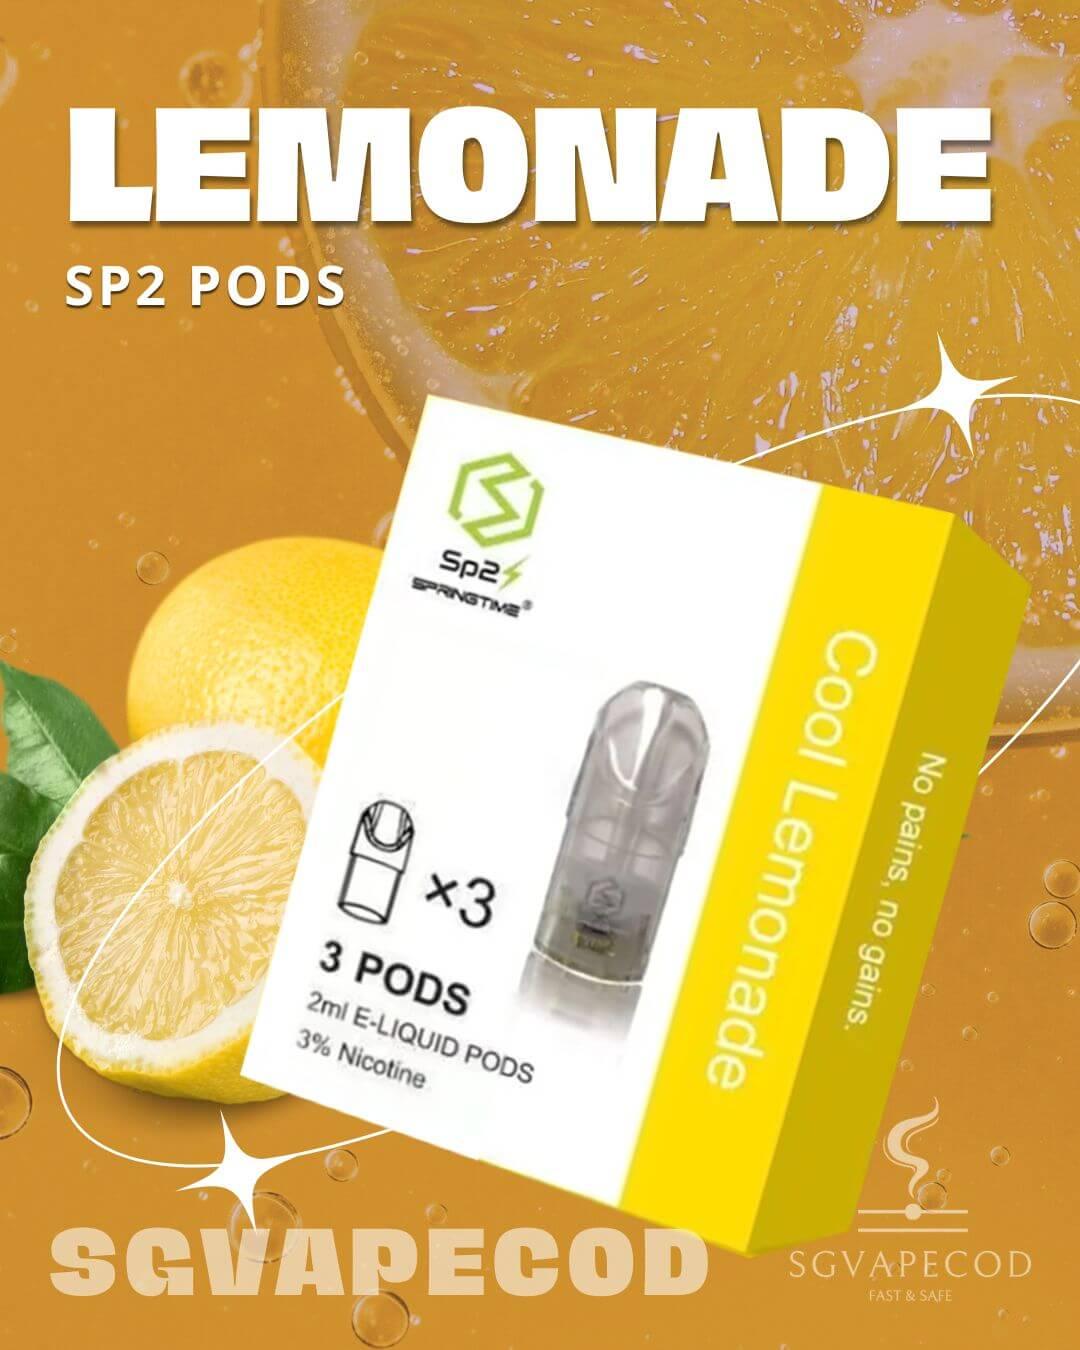 Sp2-Pod-Lemonade-(SG VAPE COD)